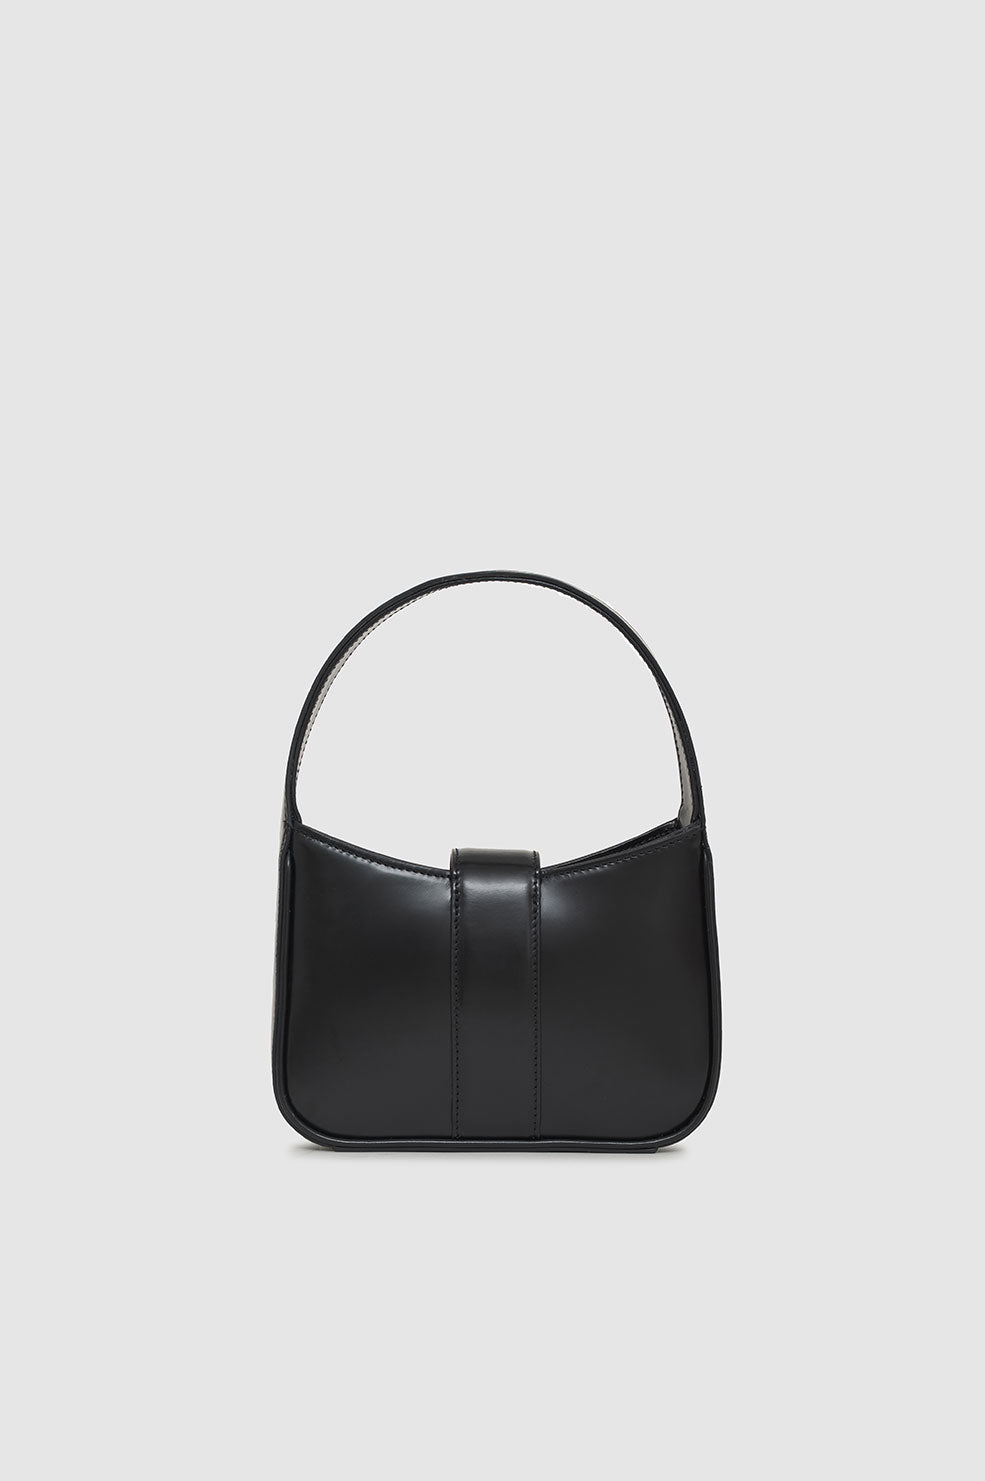 Louis Vuitton Shiny Black Handbag